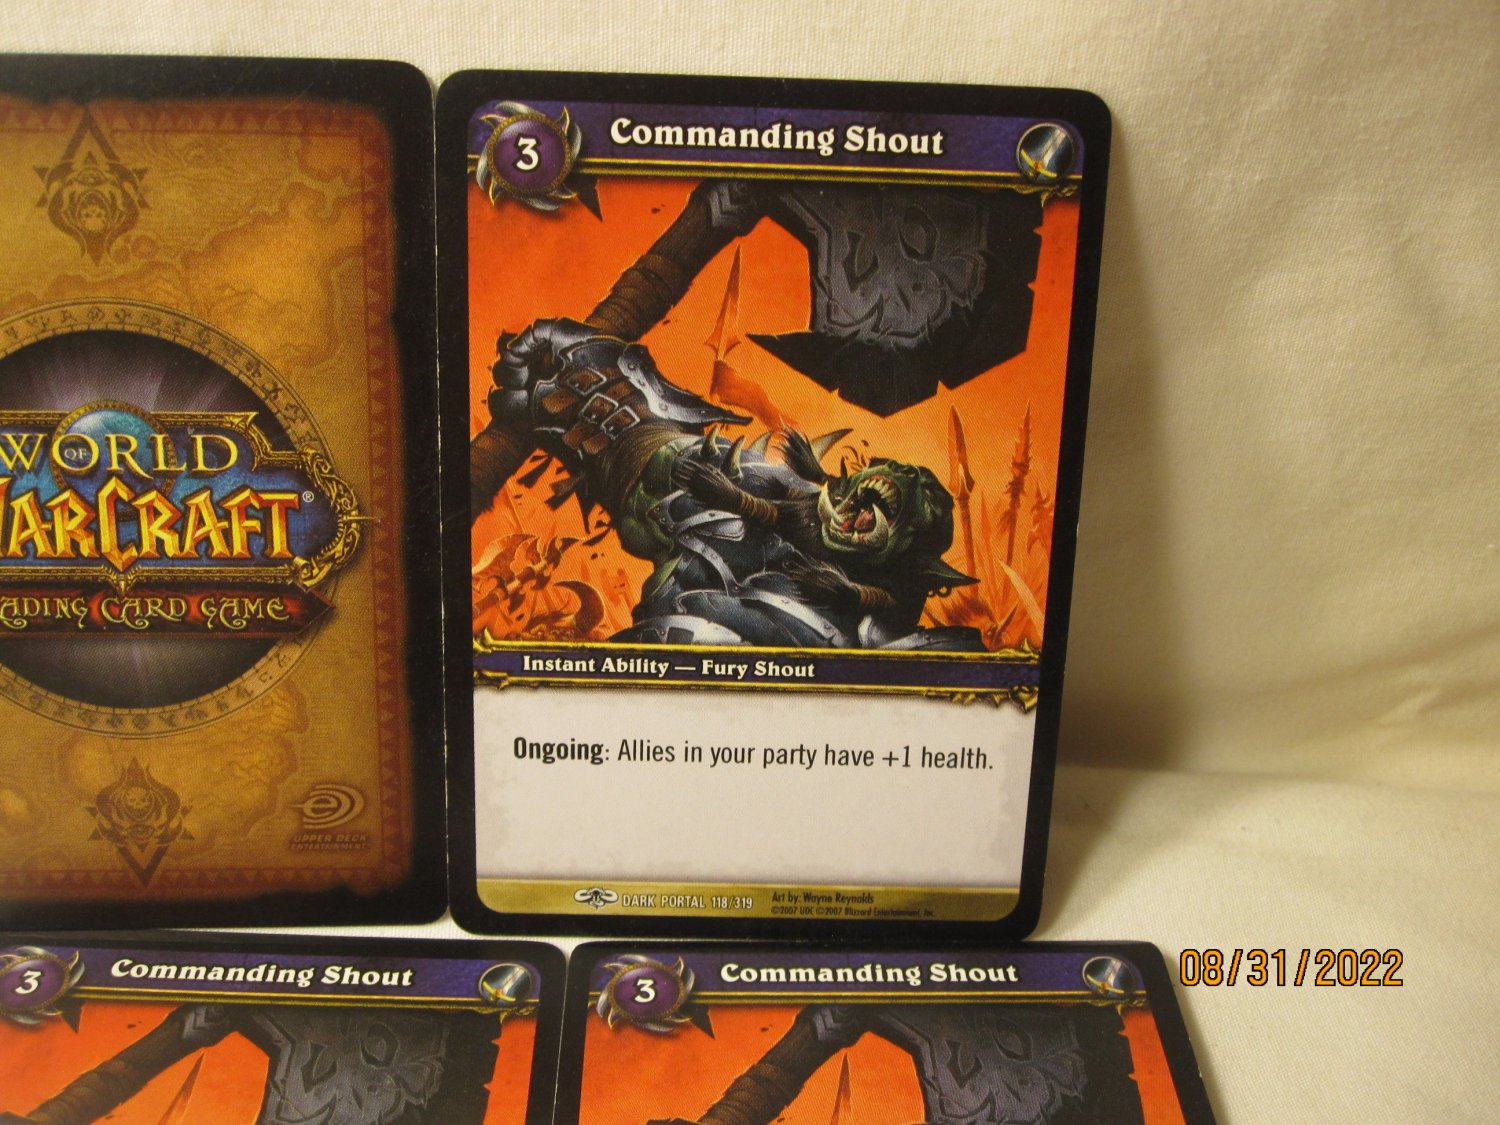 2007 World of Warcraft TCG Dark Portal card #118/319: Commanding Shout